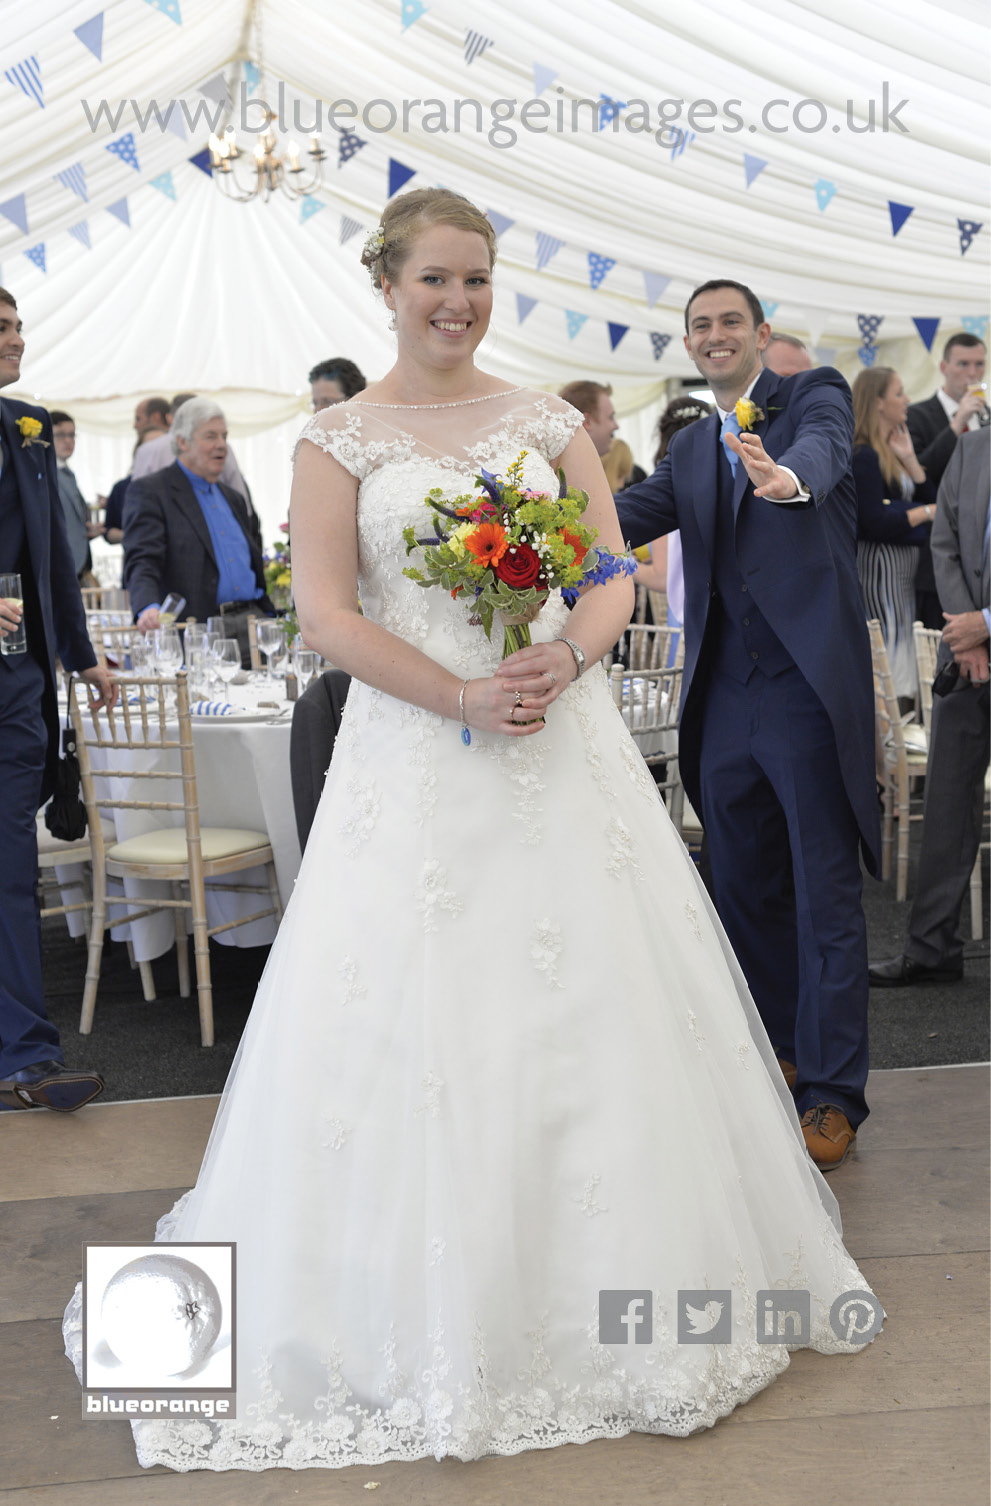 Katriona & Nick’s wedding in Sandridge, St Albans, Herts